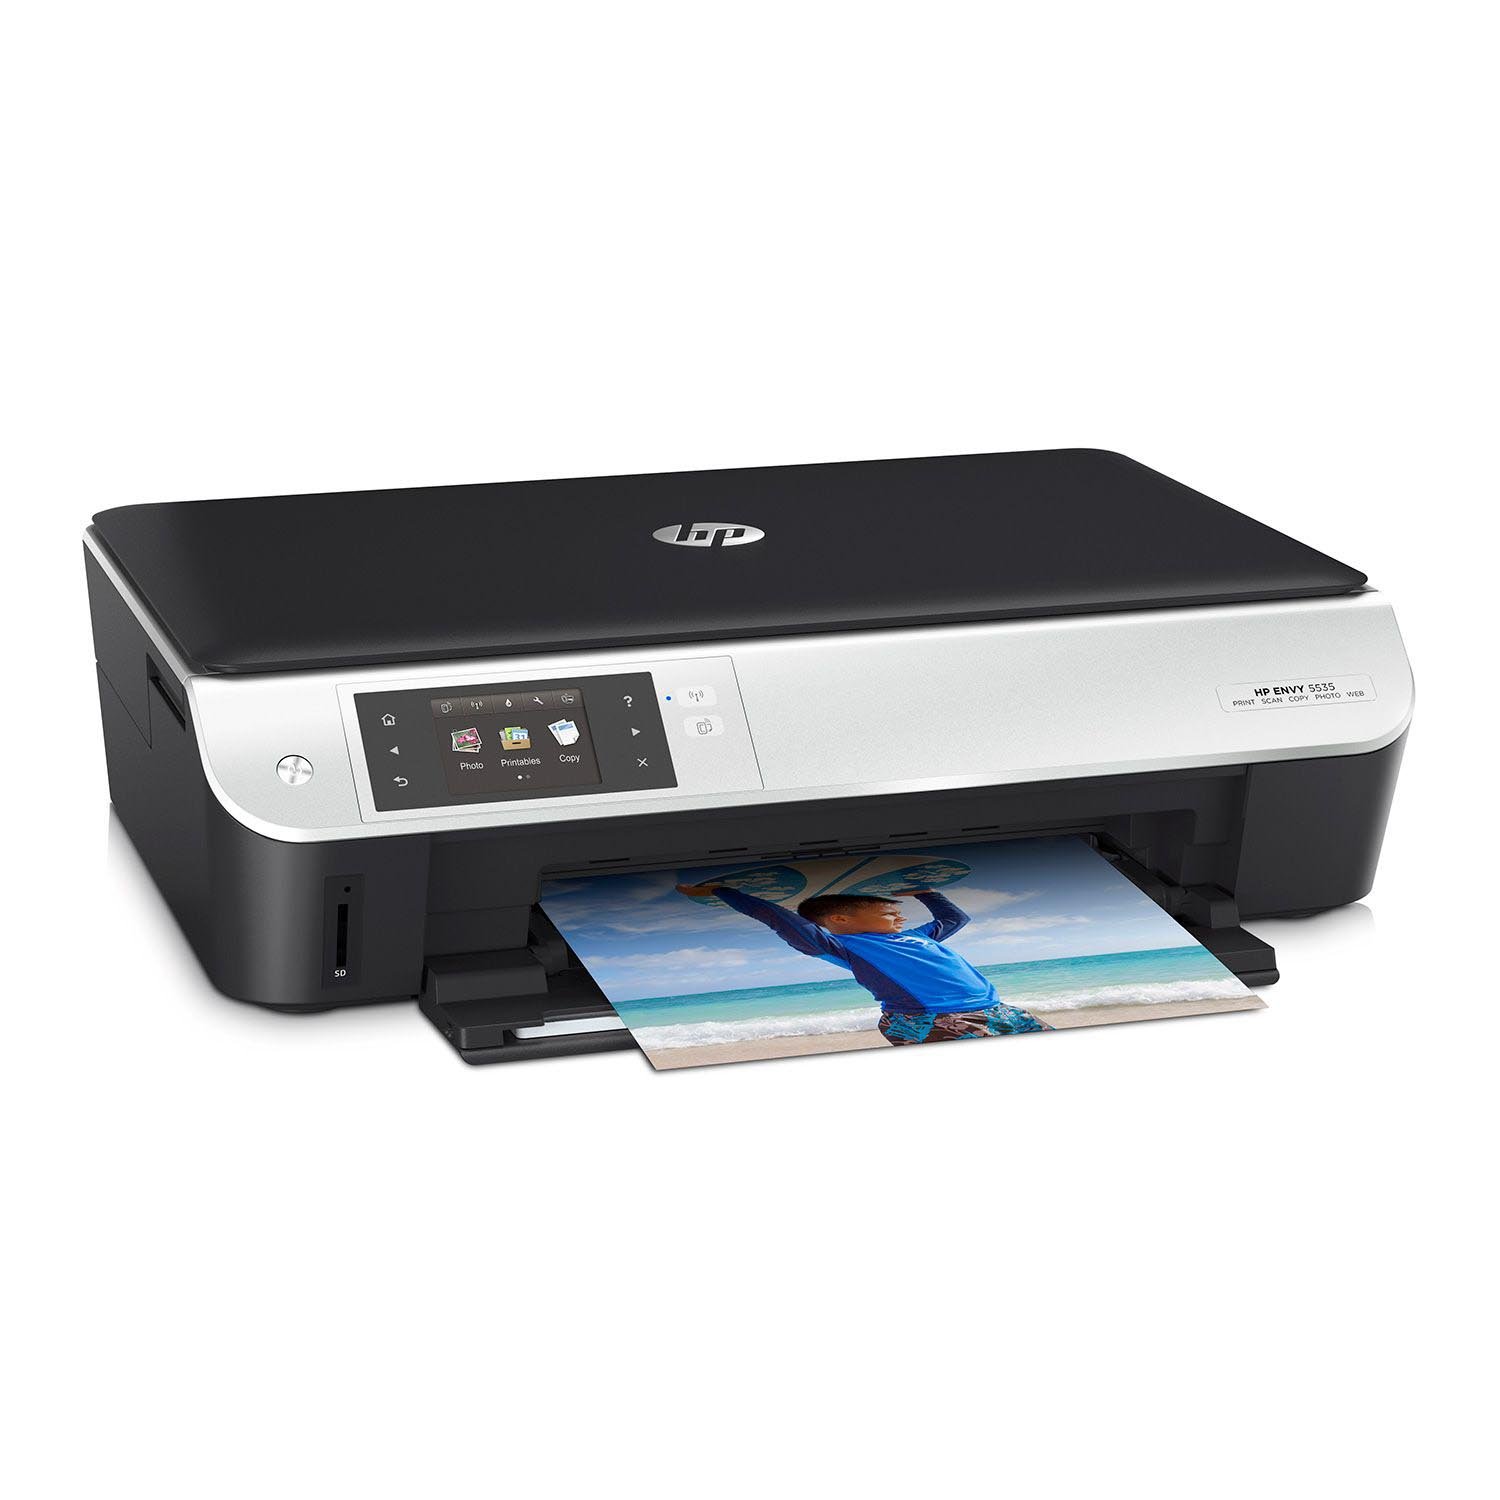 ENVY 5535 e-All-in-One Printer